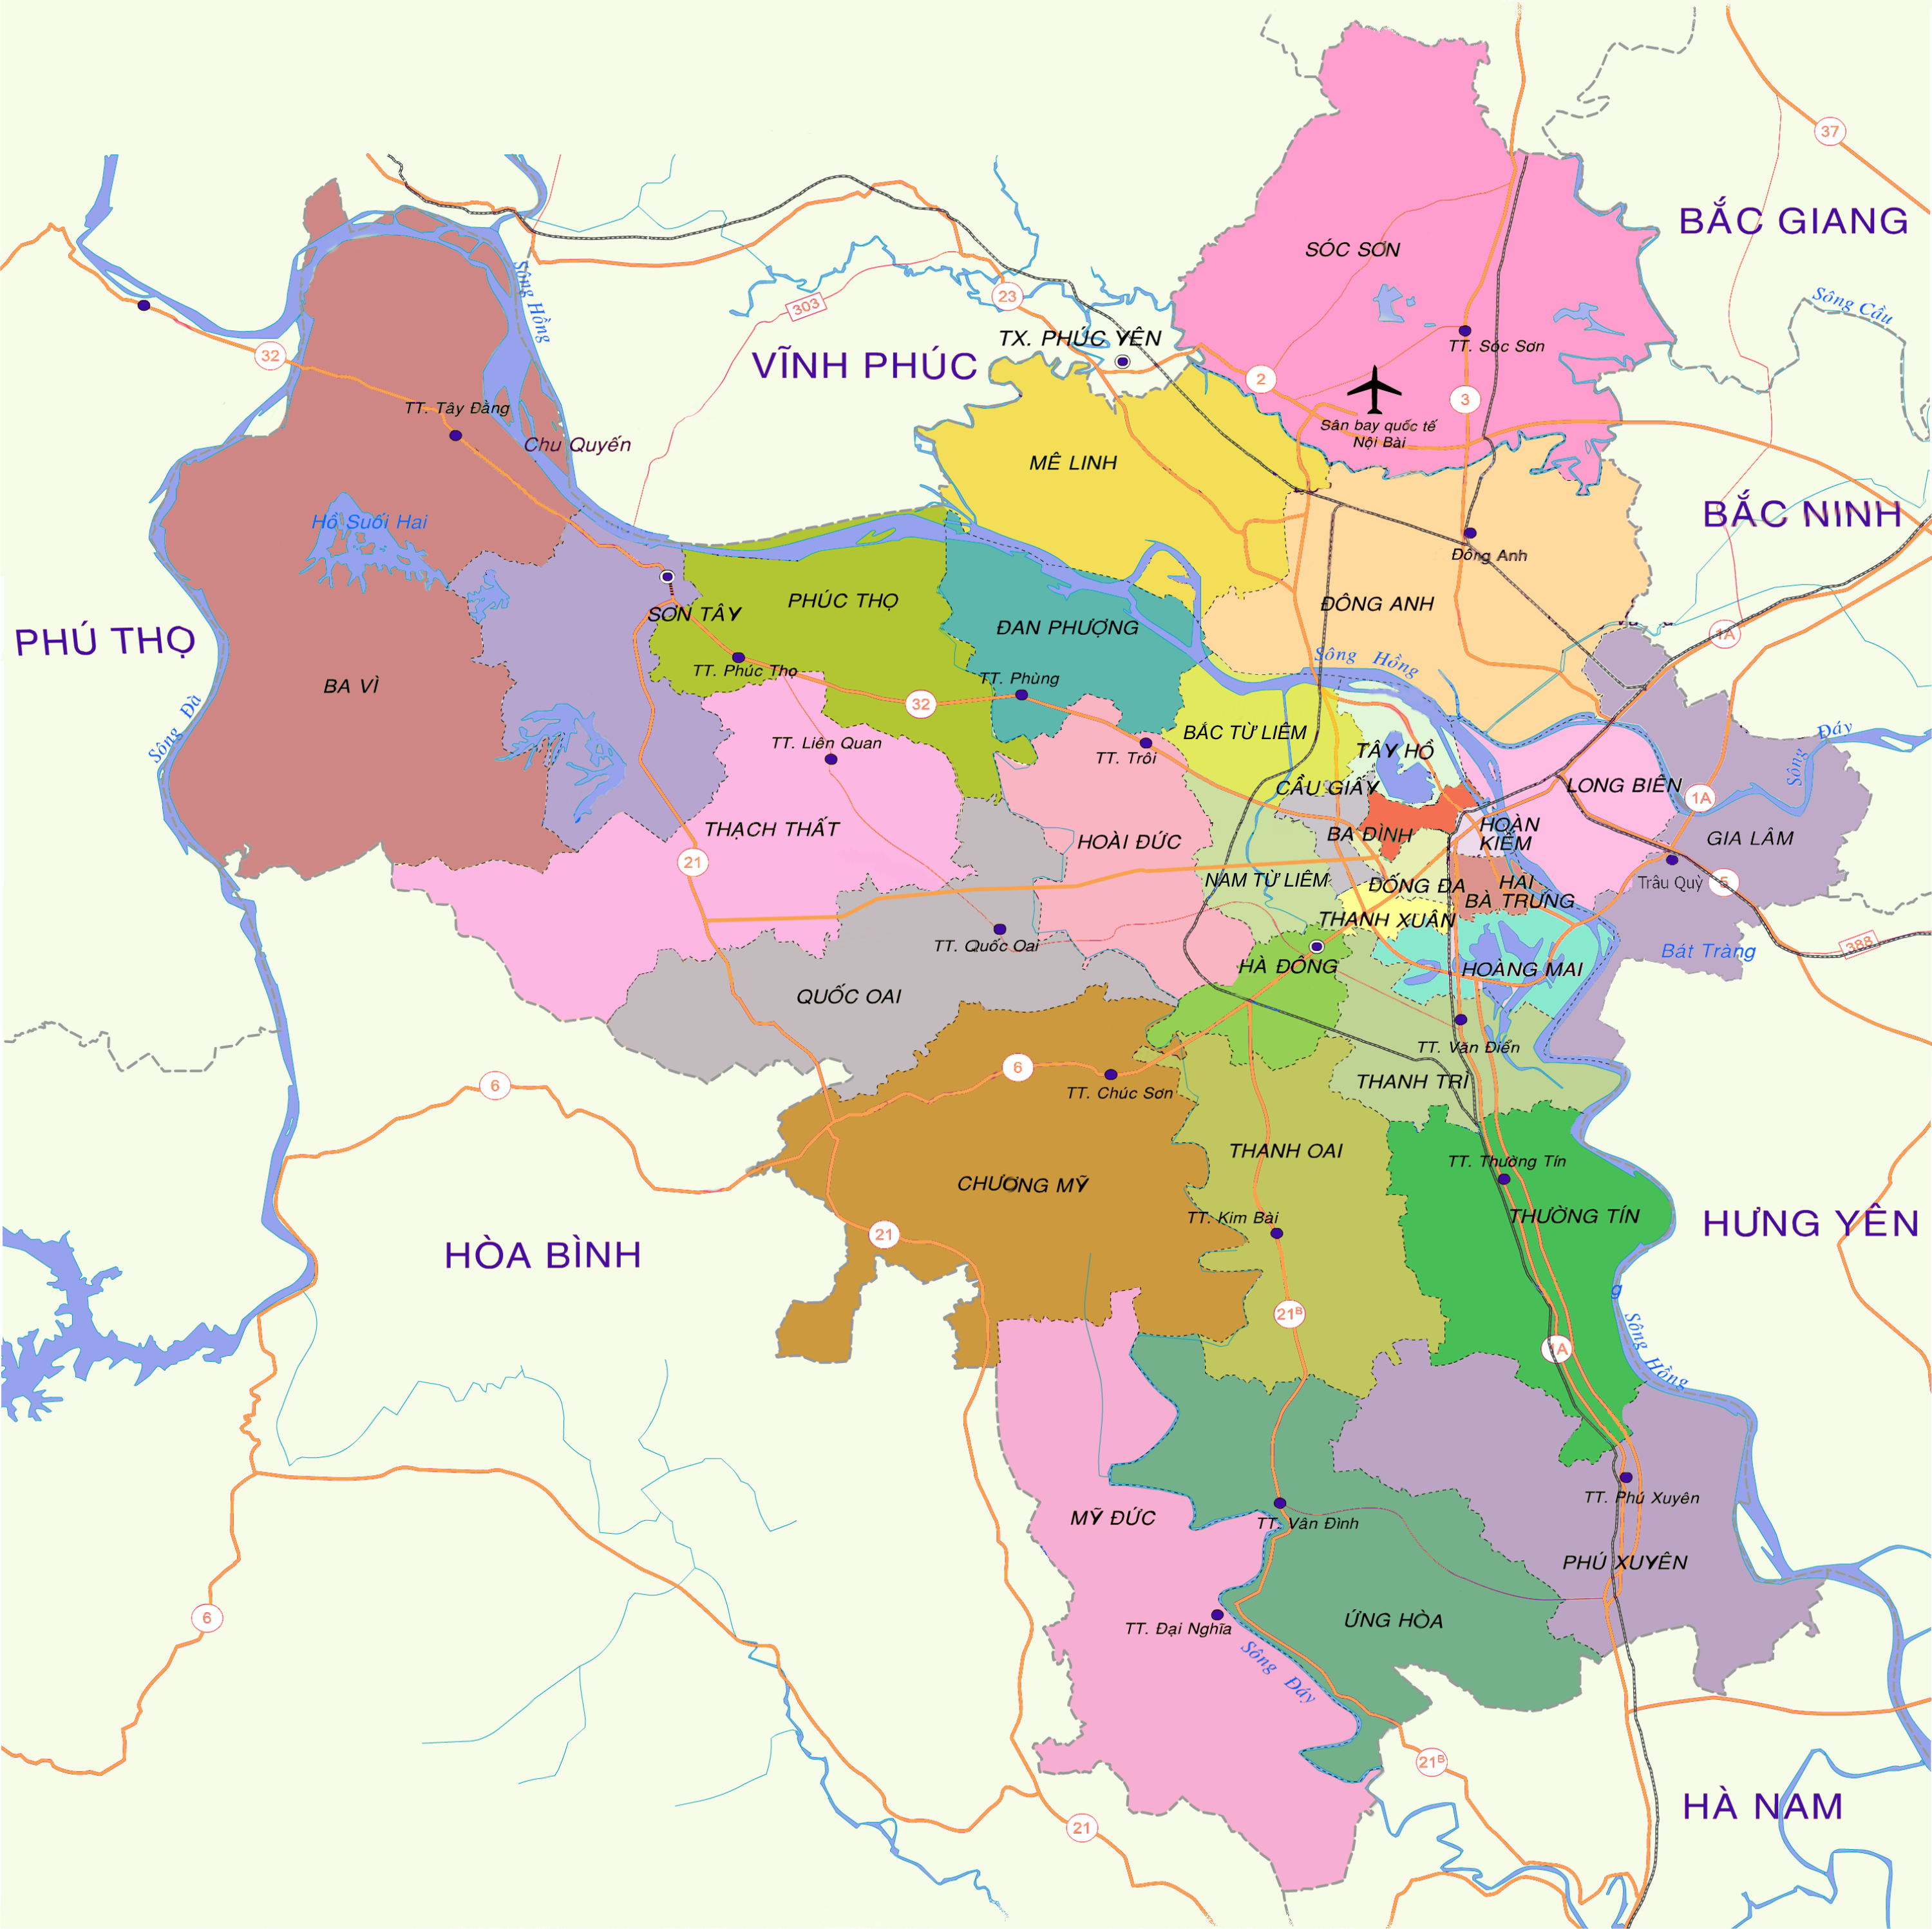 Topographic map sheet designation of Hap Linh Ward, Bac Ninh City